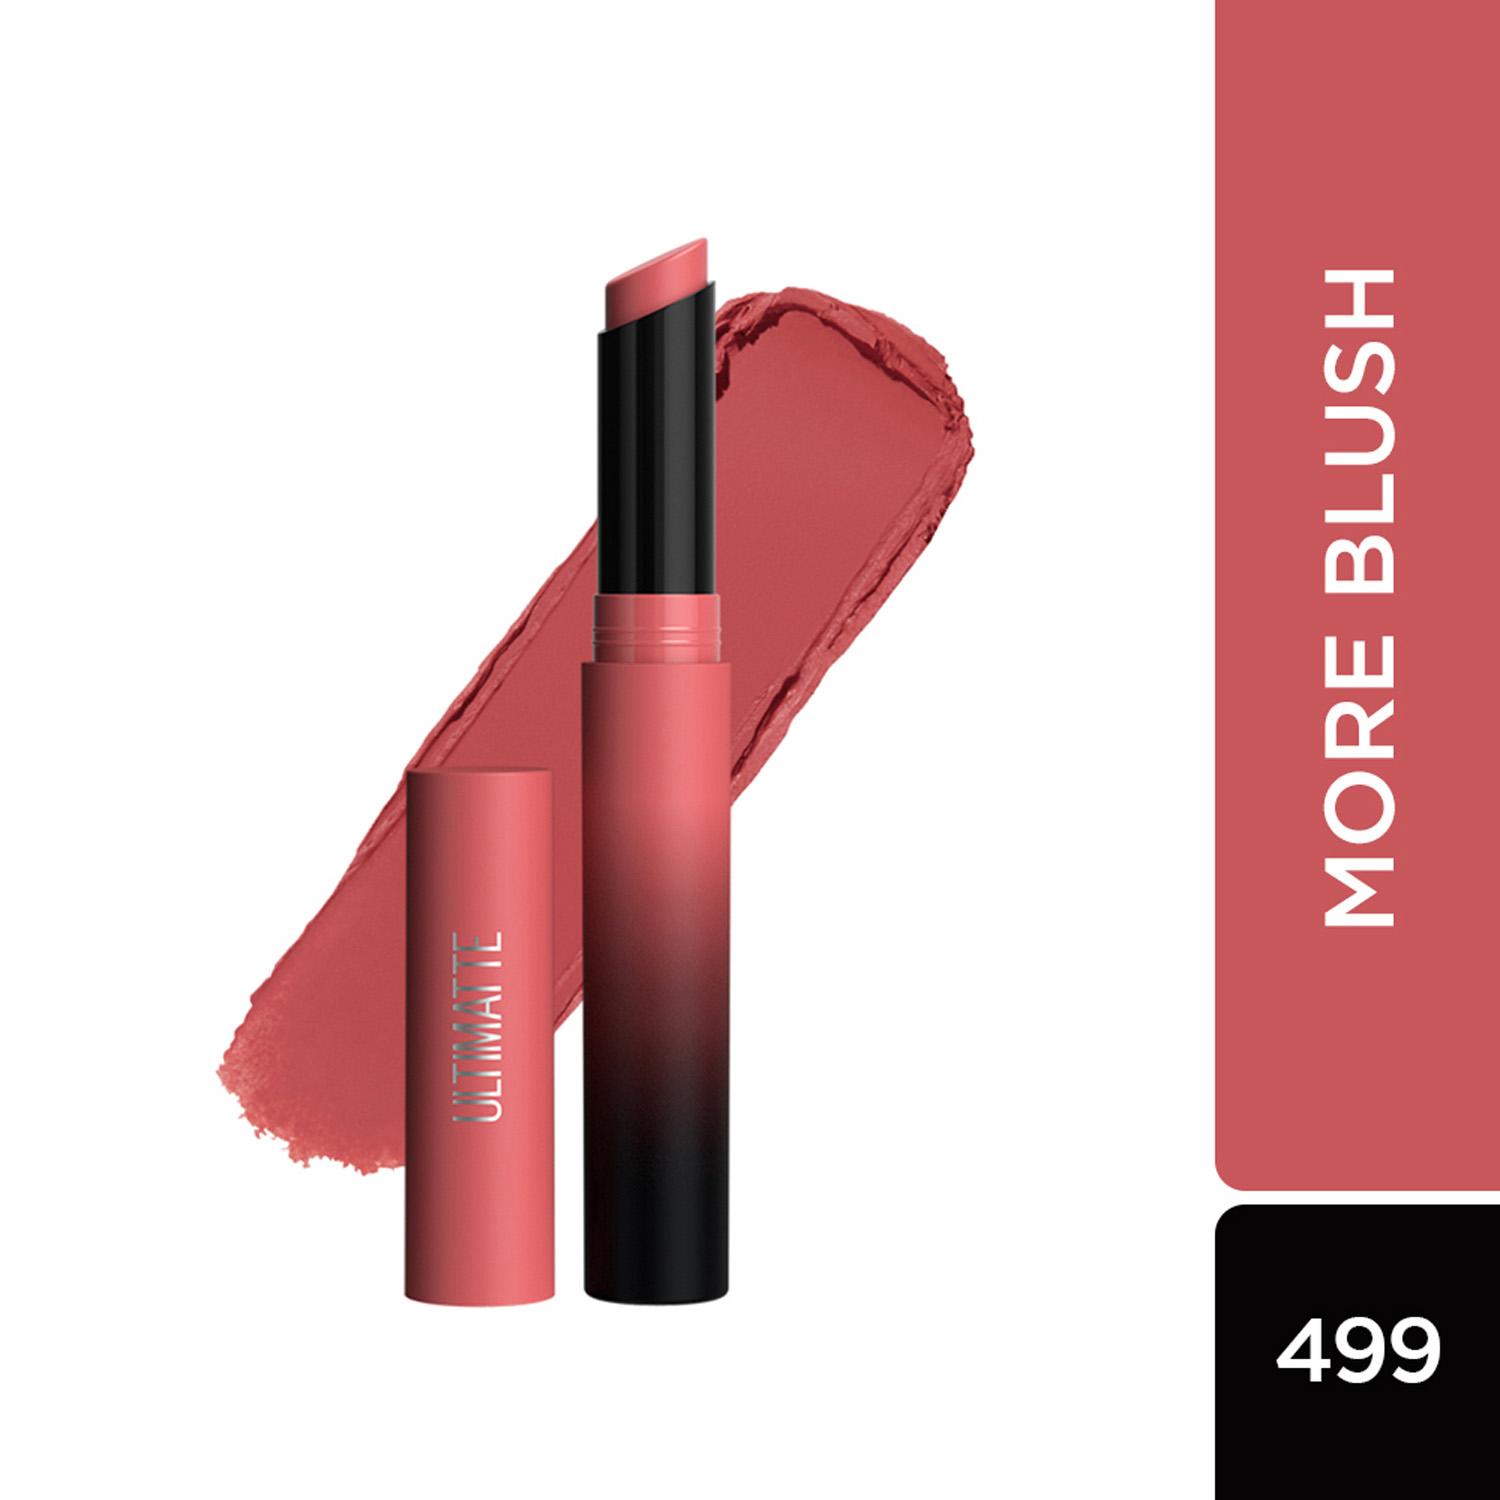 Maybelline New York | Maybelline New York Color Sensational Ultimattes Lipstick - More Blush (1.7g)